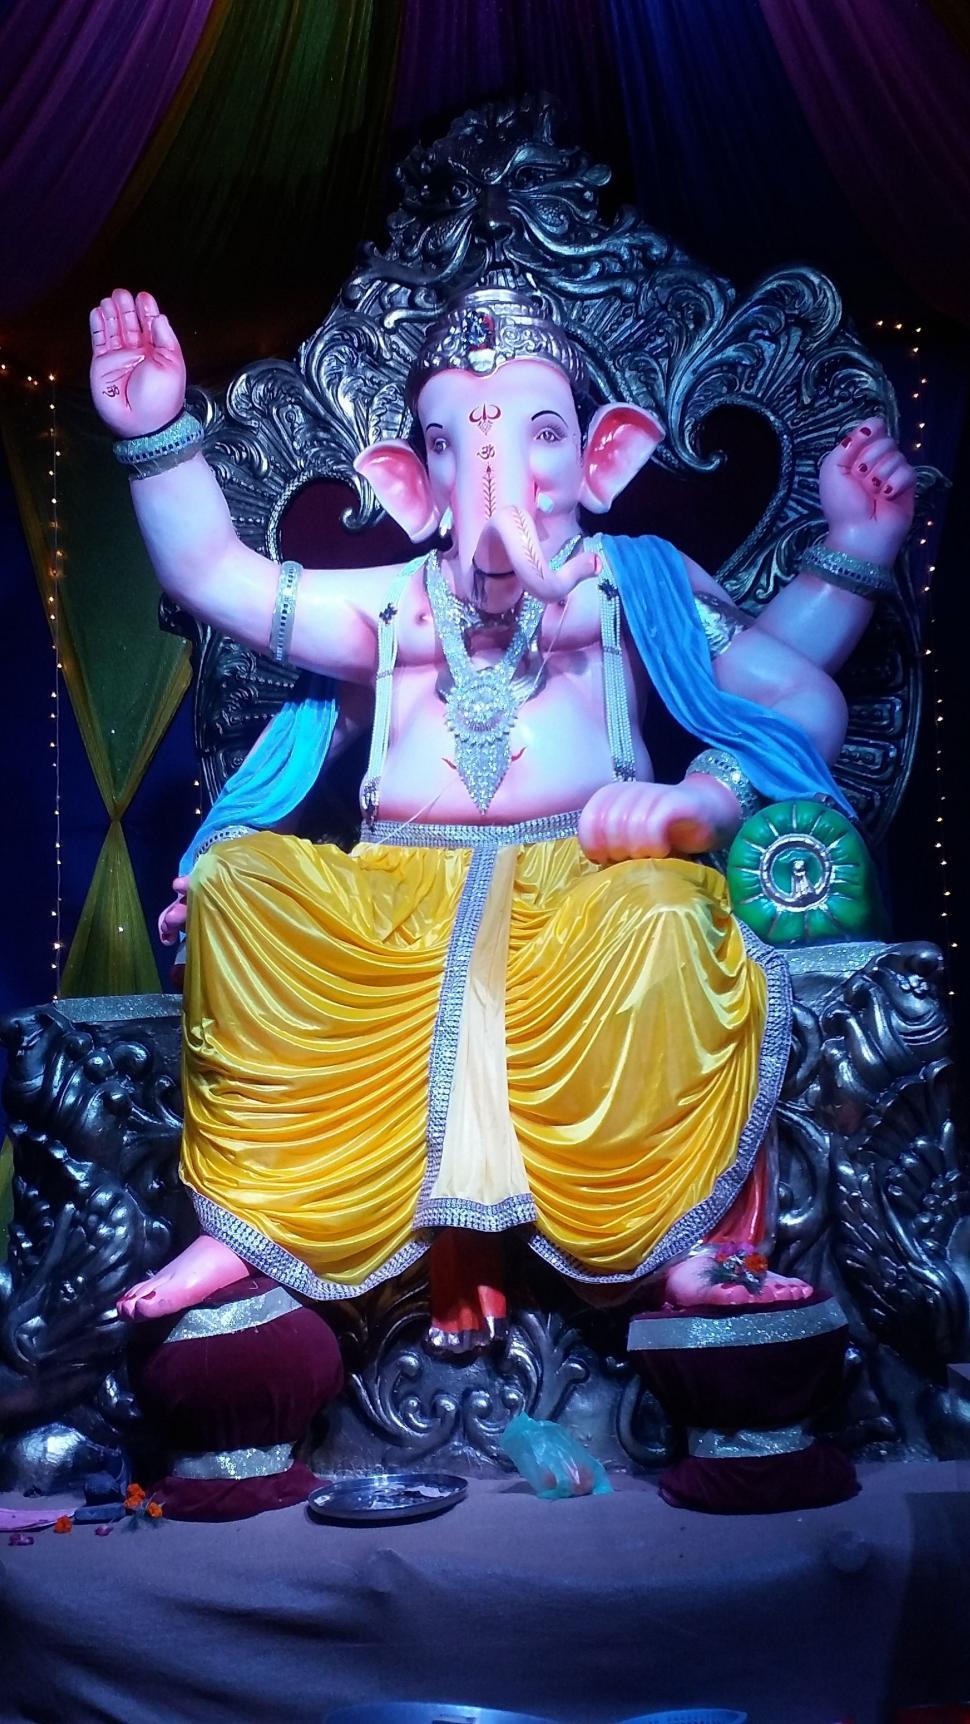 Free Image of Lord Ganesha statue 